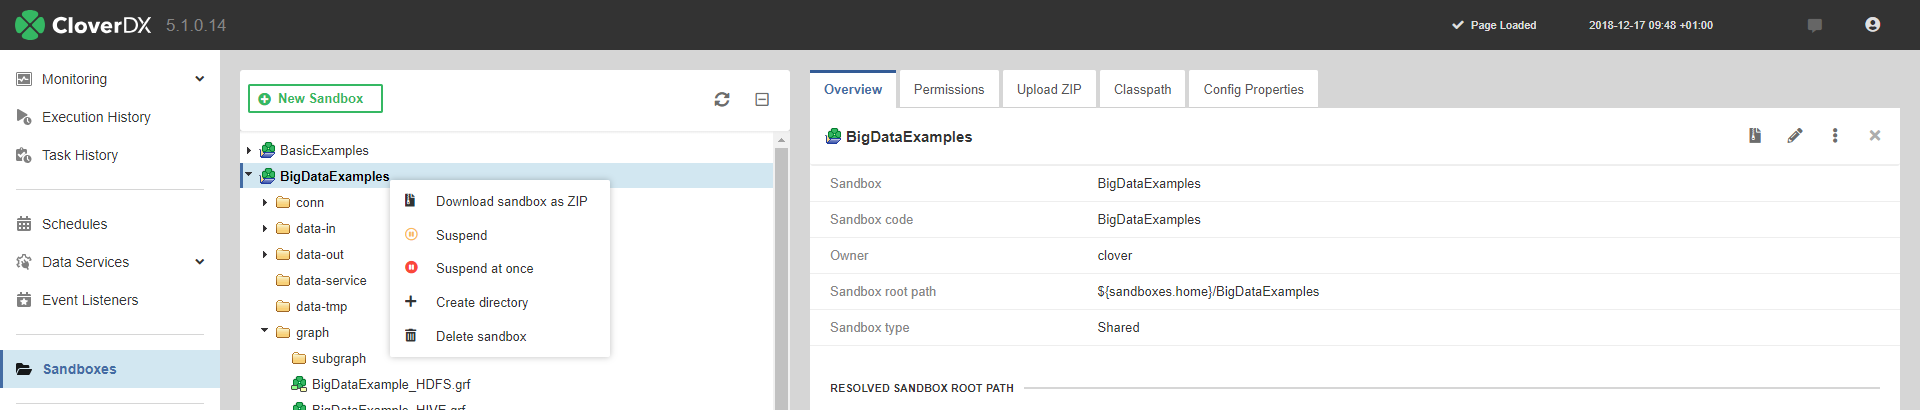 GUI - Sandboxes context menu